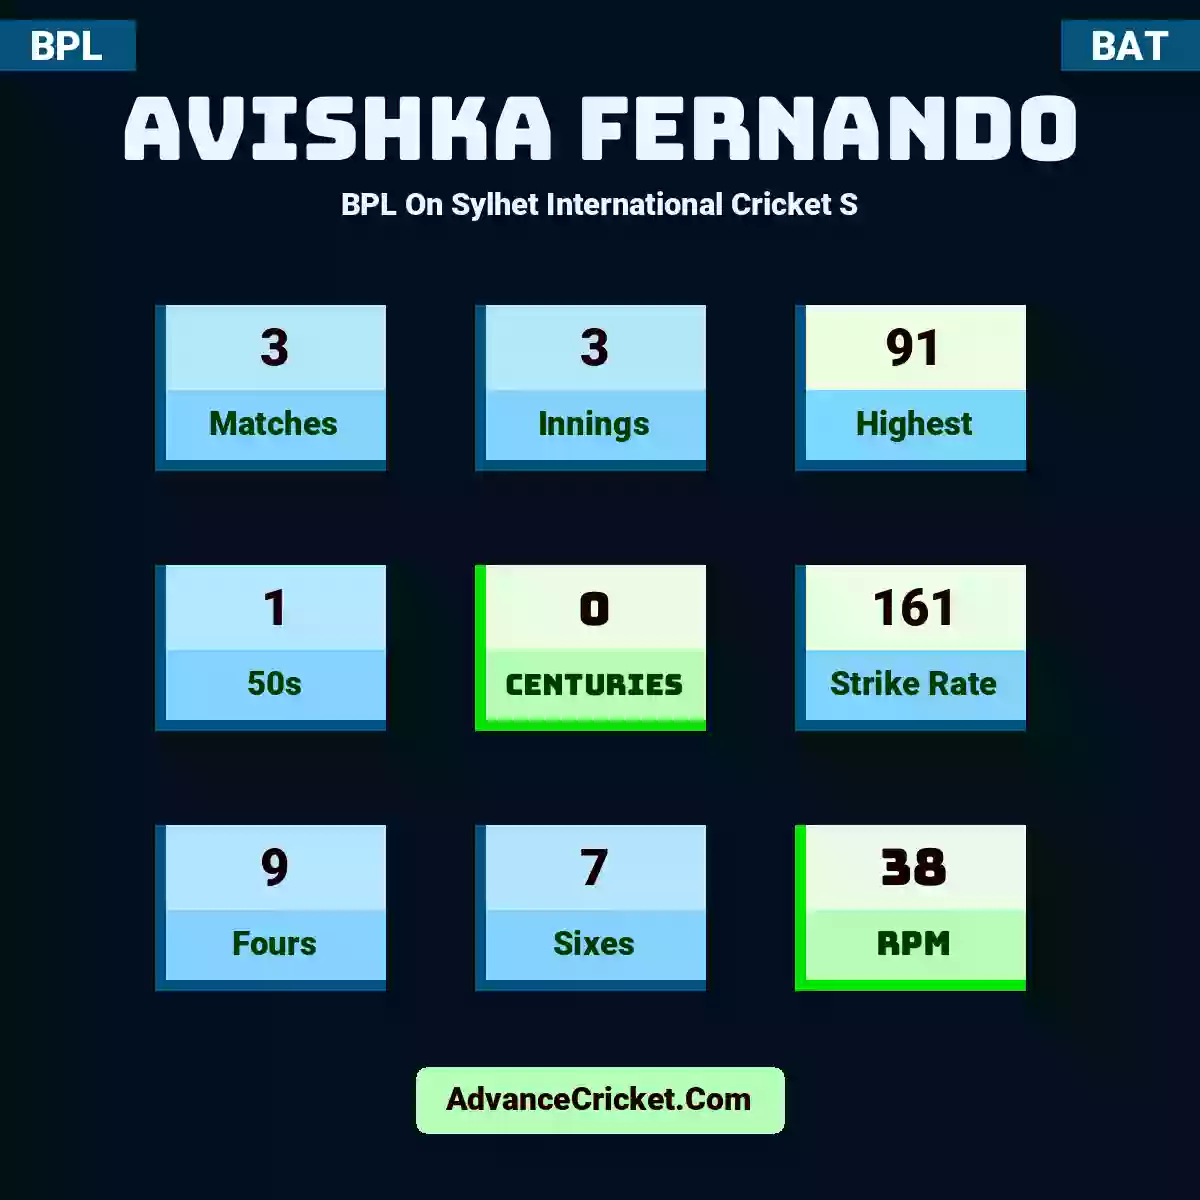 Avishka Fernando BPL  On Sylhet International Cricket S, Avishka Fernando played 3 matches, scored 91 runs as highest, 1 half-centuries, and 0 centuries, with a strike rate of 161. A.Fernando hit 9 fours and 7 sixes, with an RPM of 38.